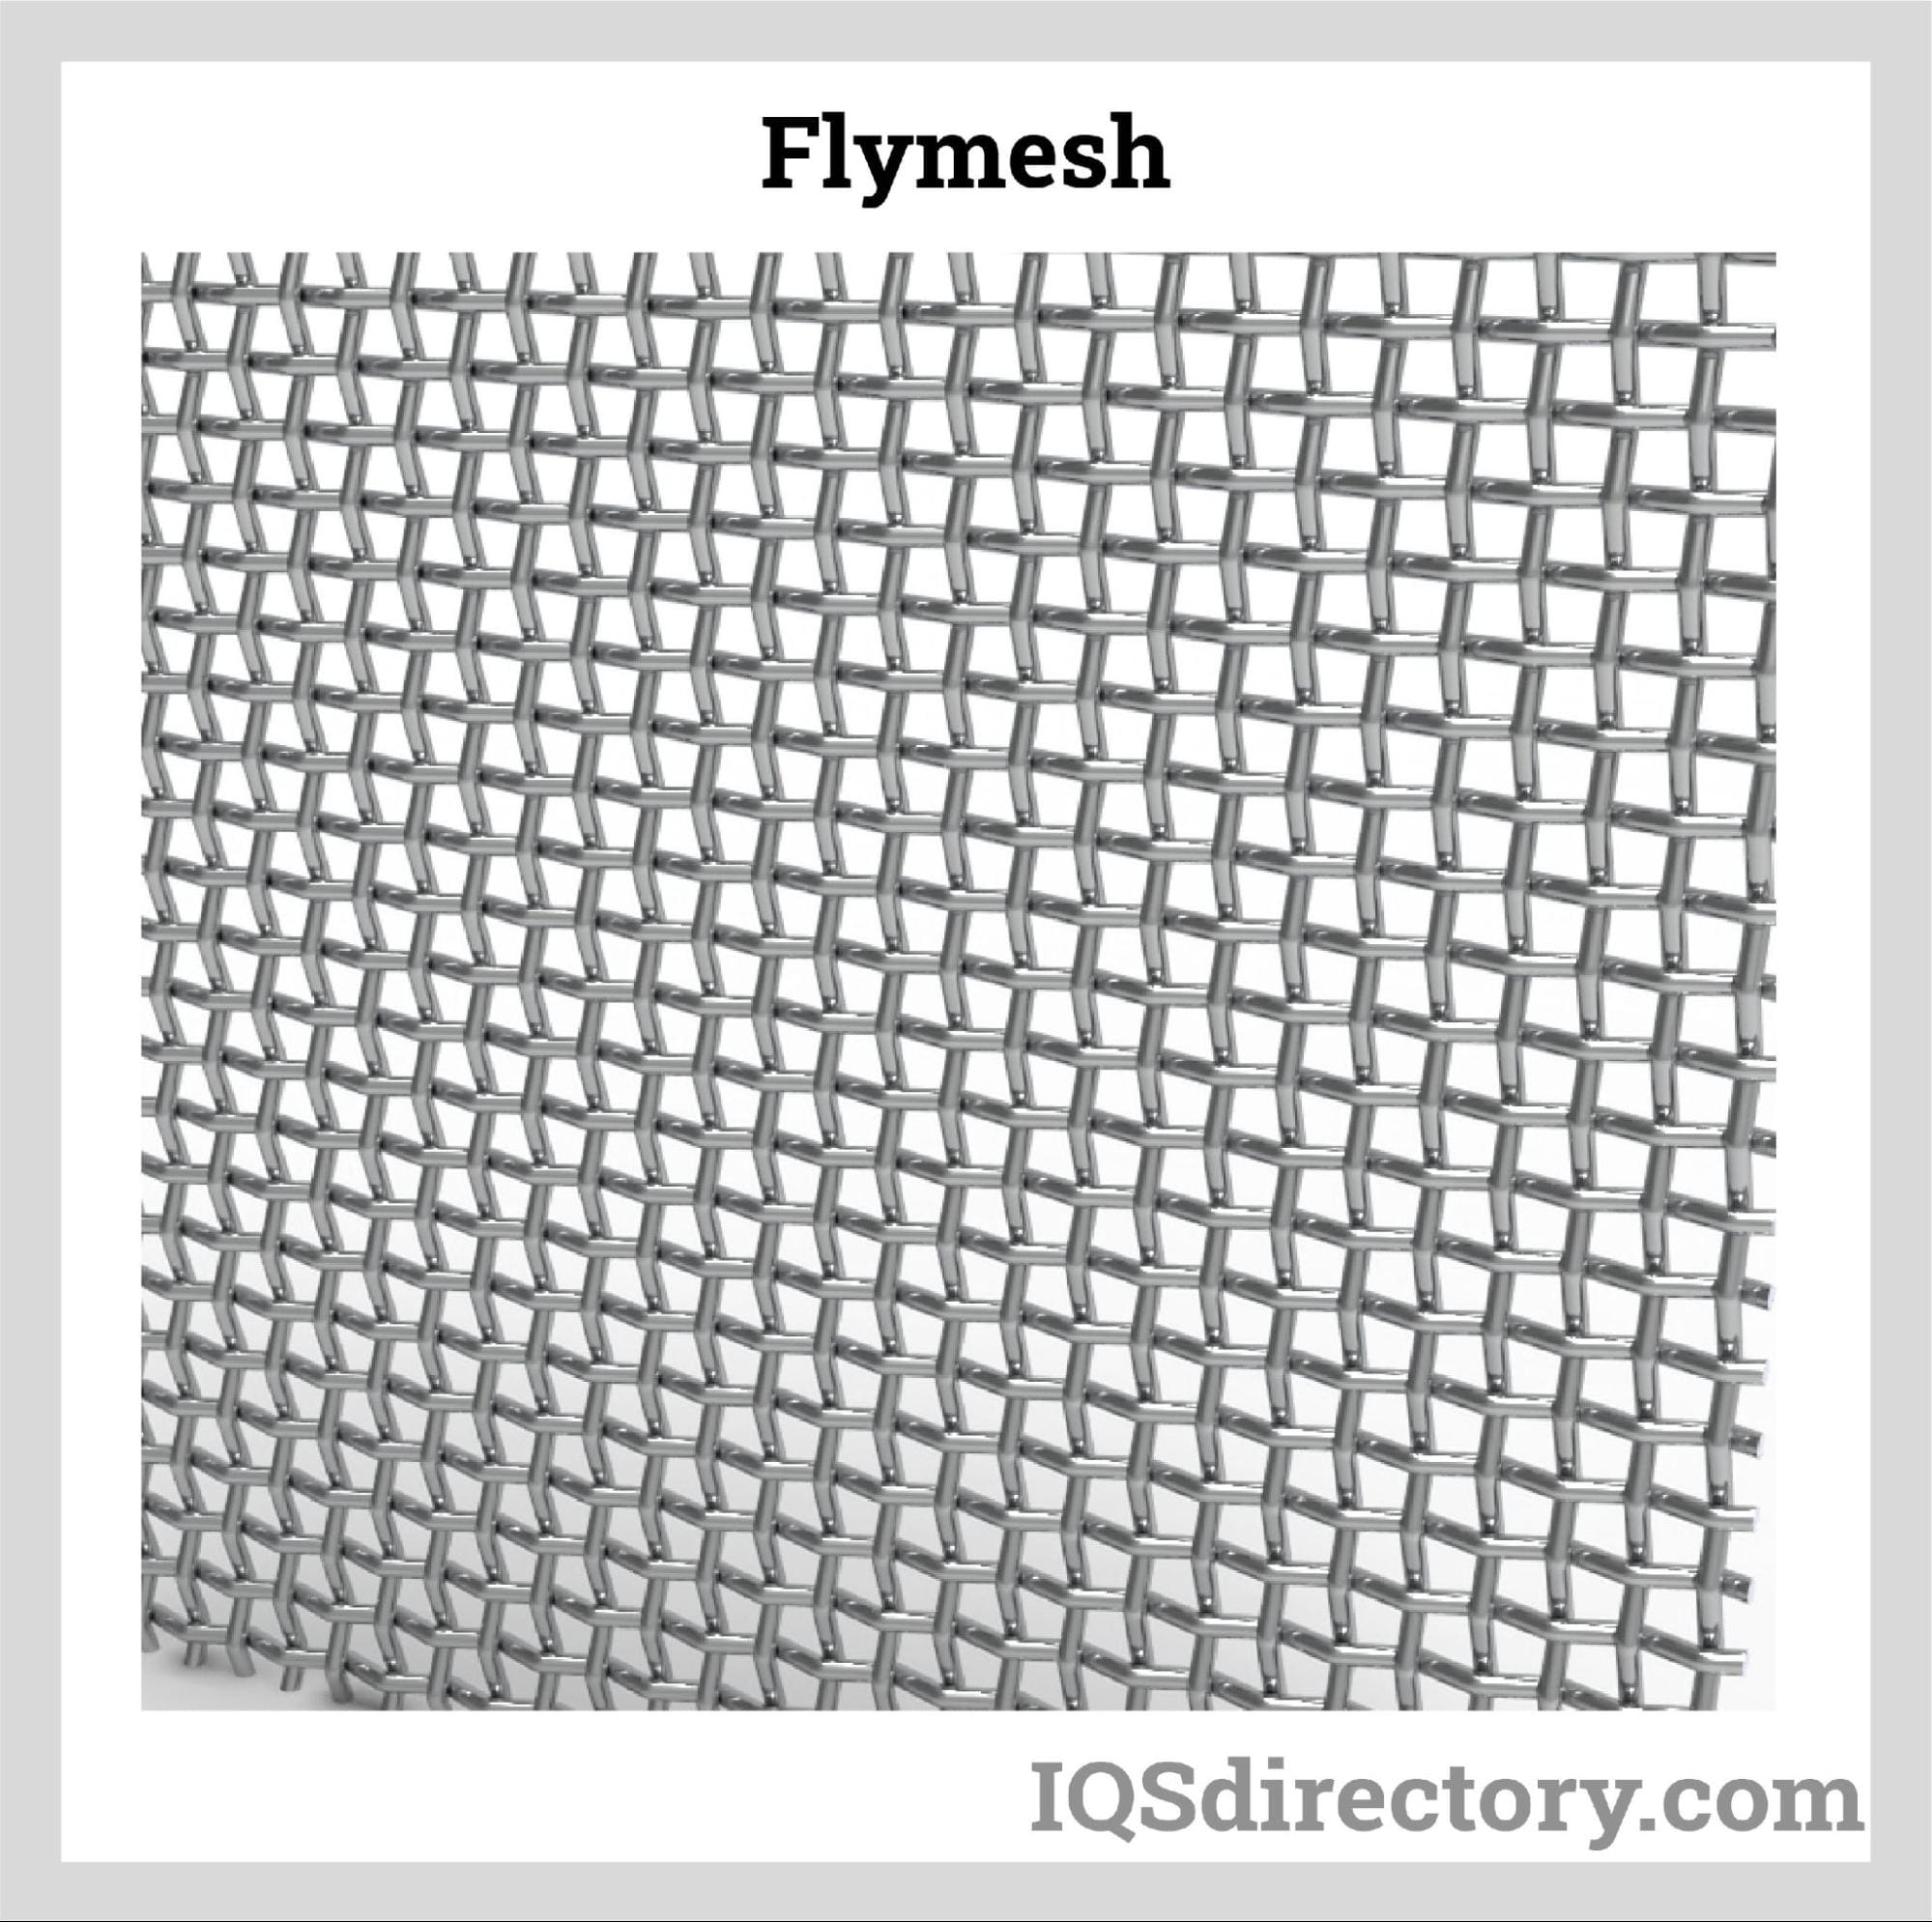 Flymesh